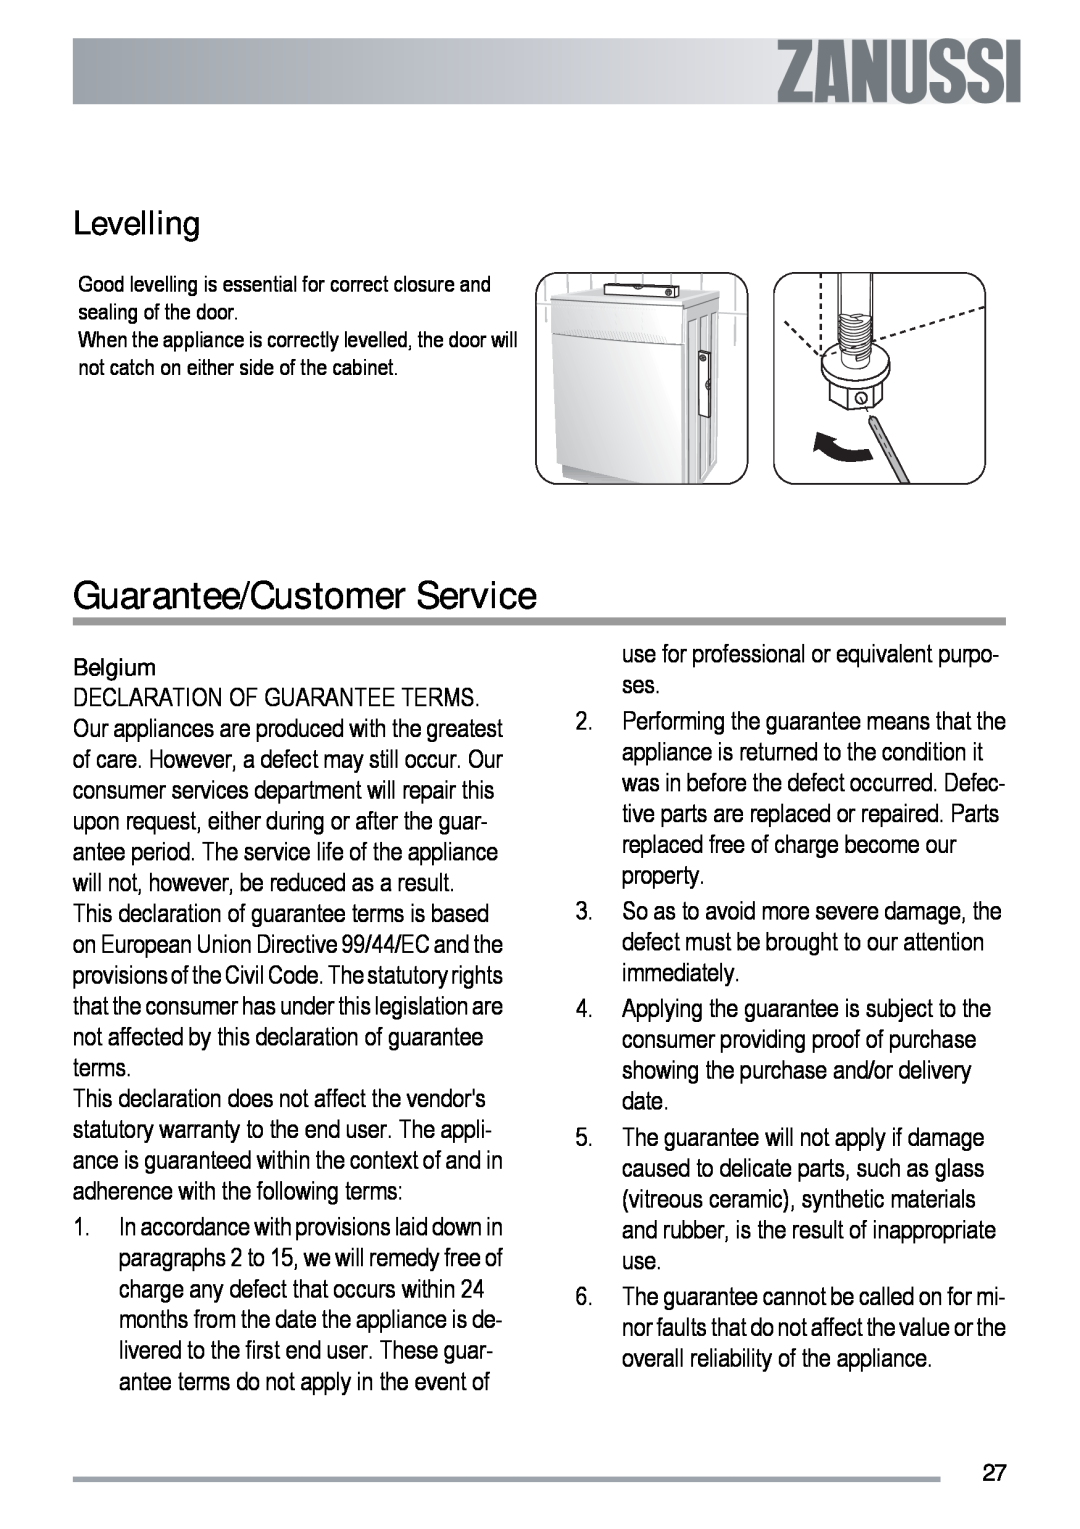 Zanussi ZDF 312 user manual Guarantee/Customer Service, Levelling, Belgium 